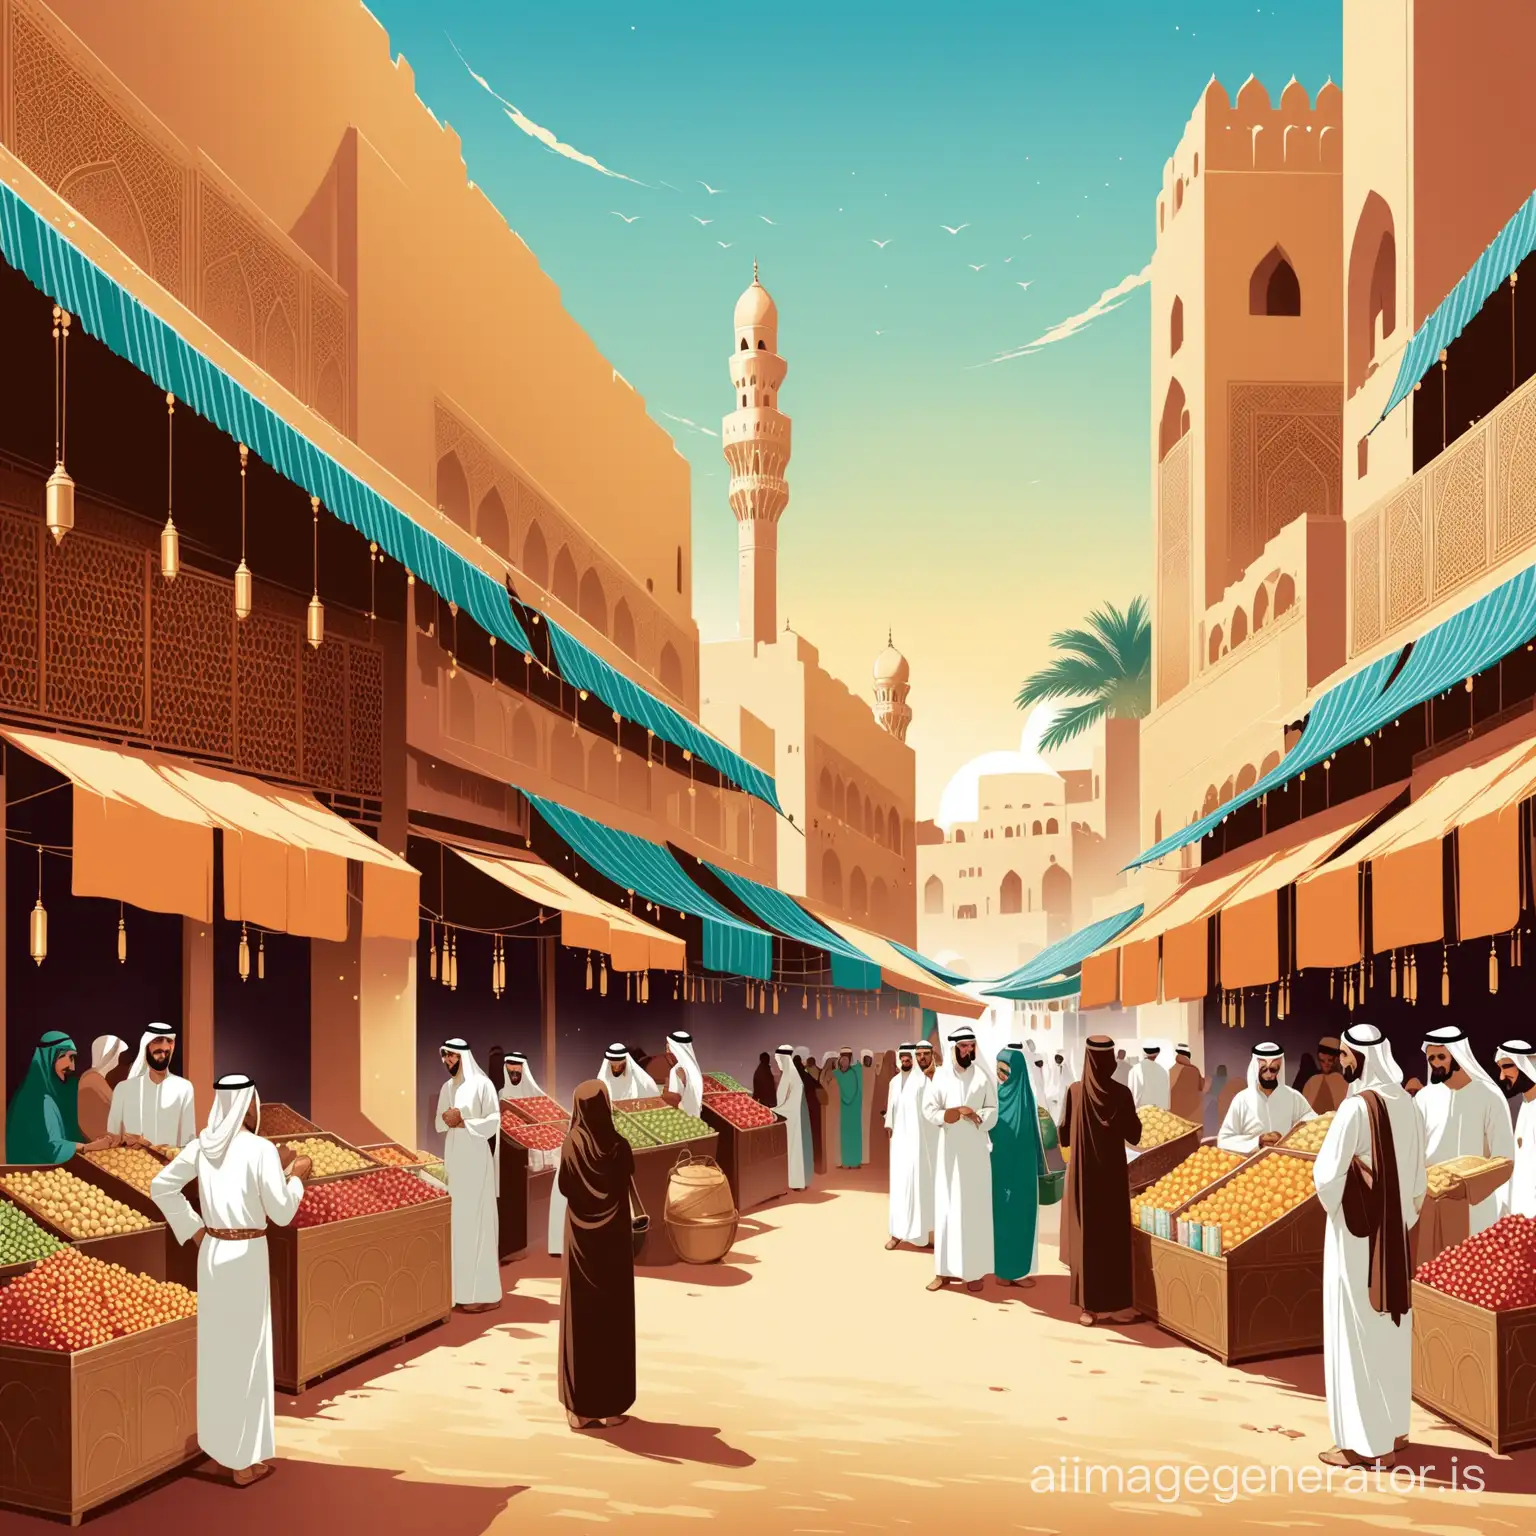 arab market scene art deco illustration